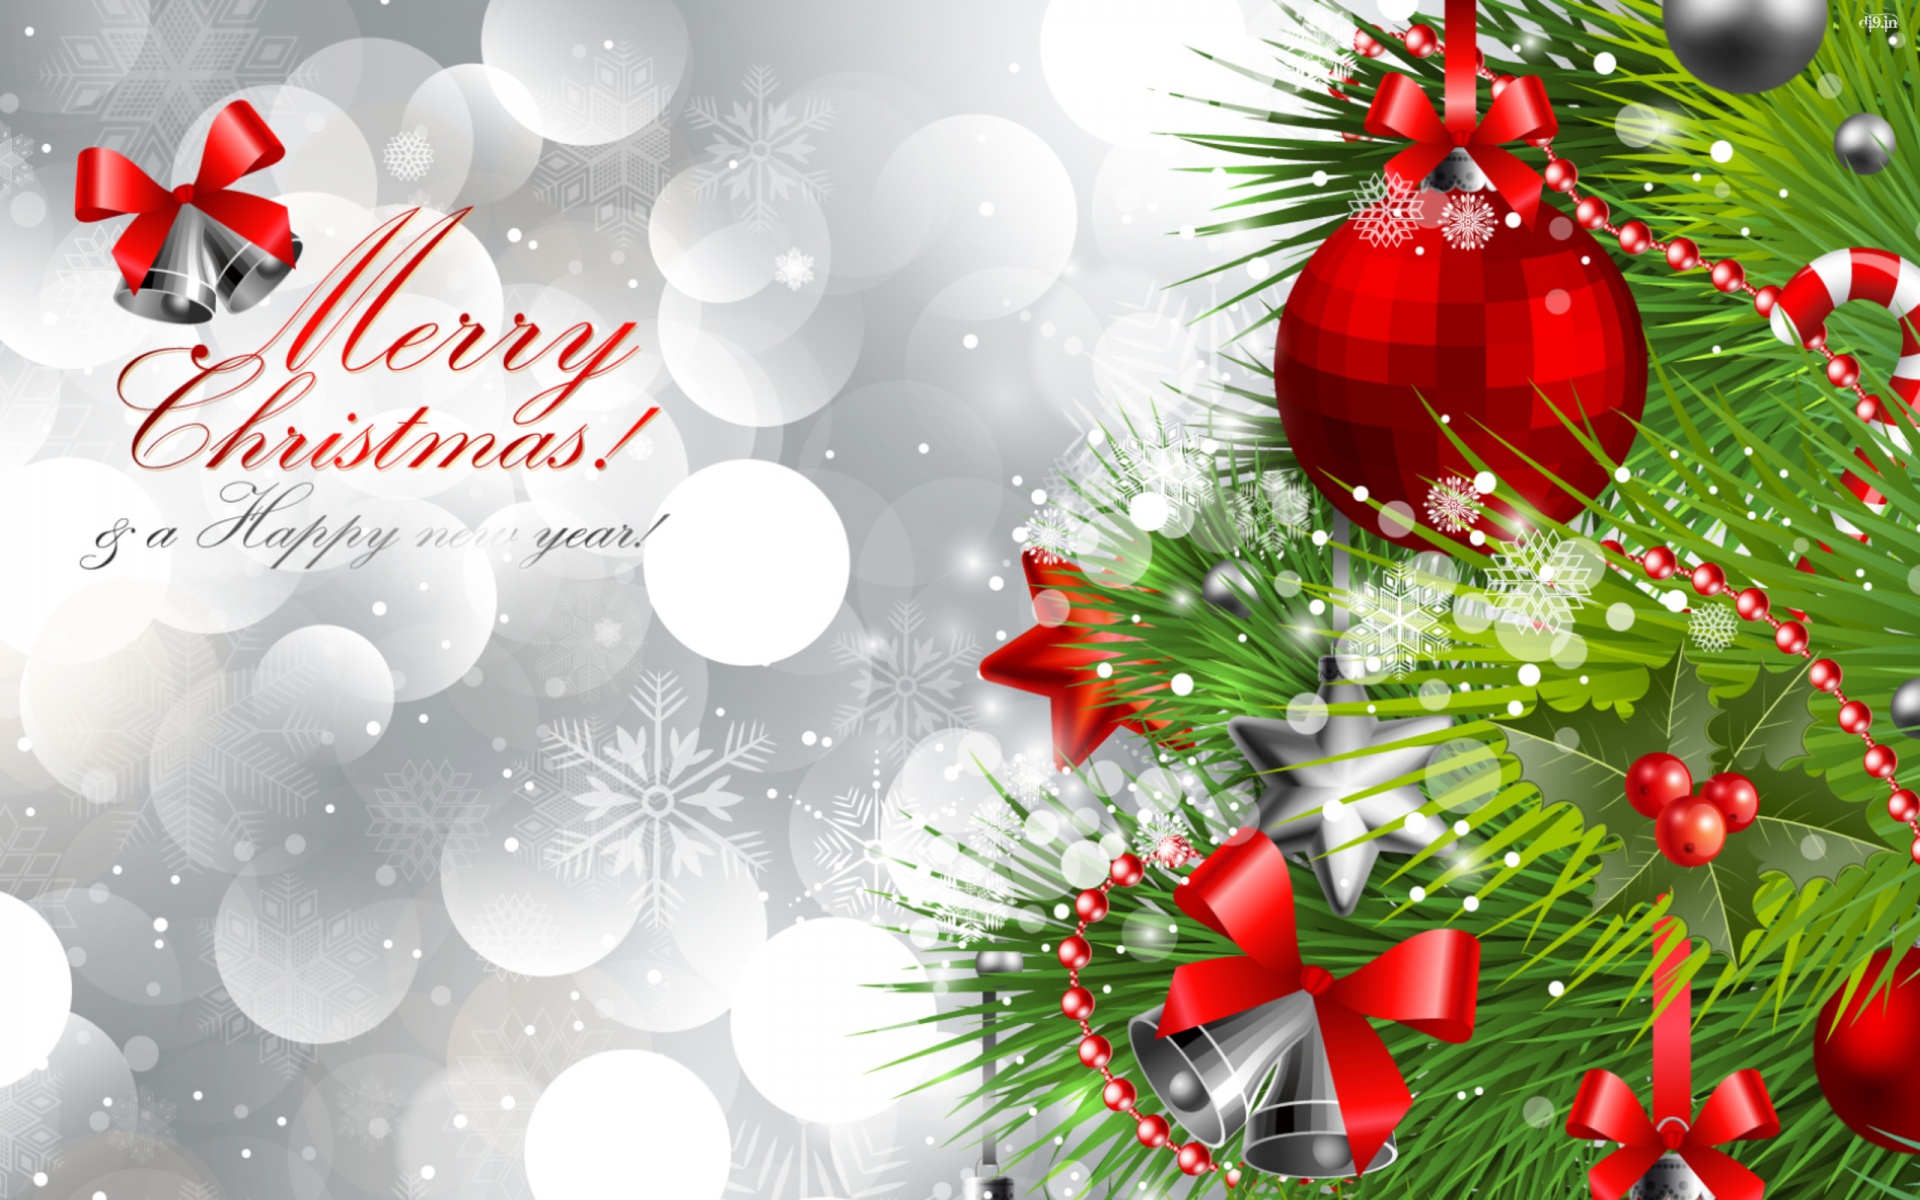 Merry christmas happy new year 2014